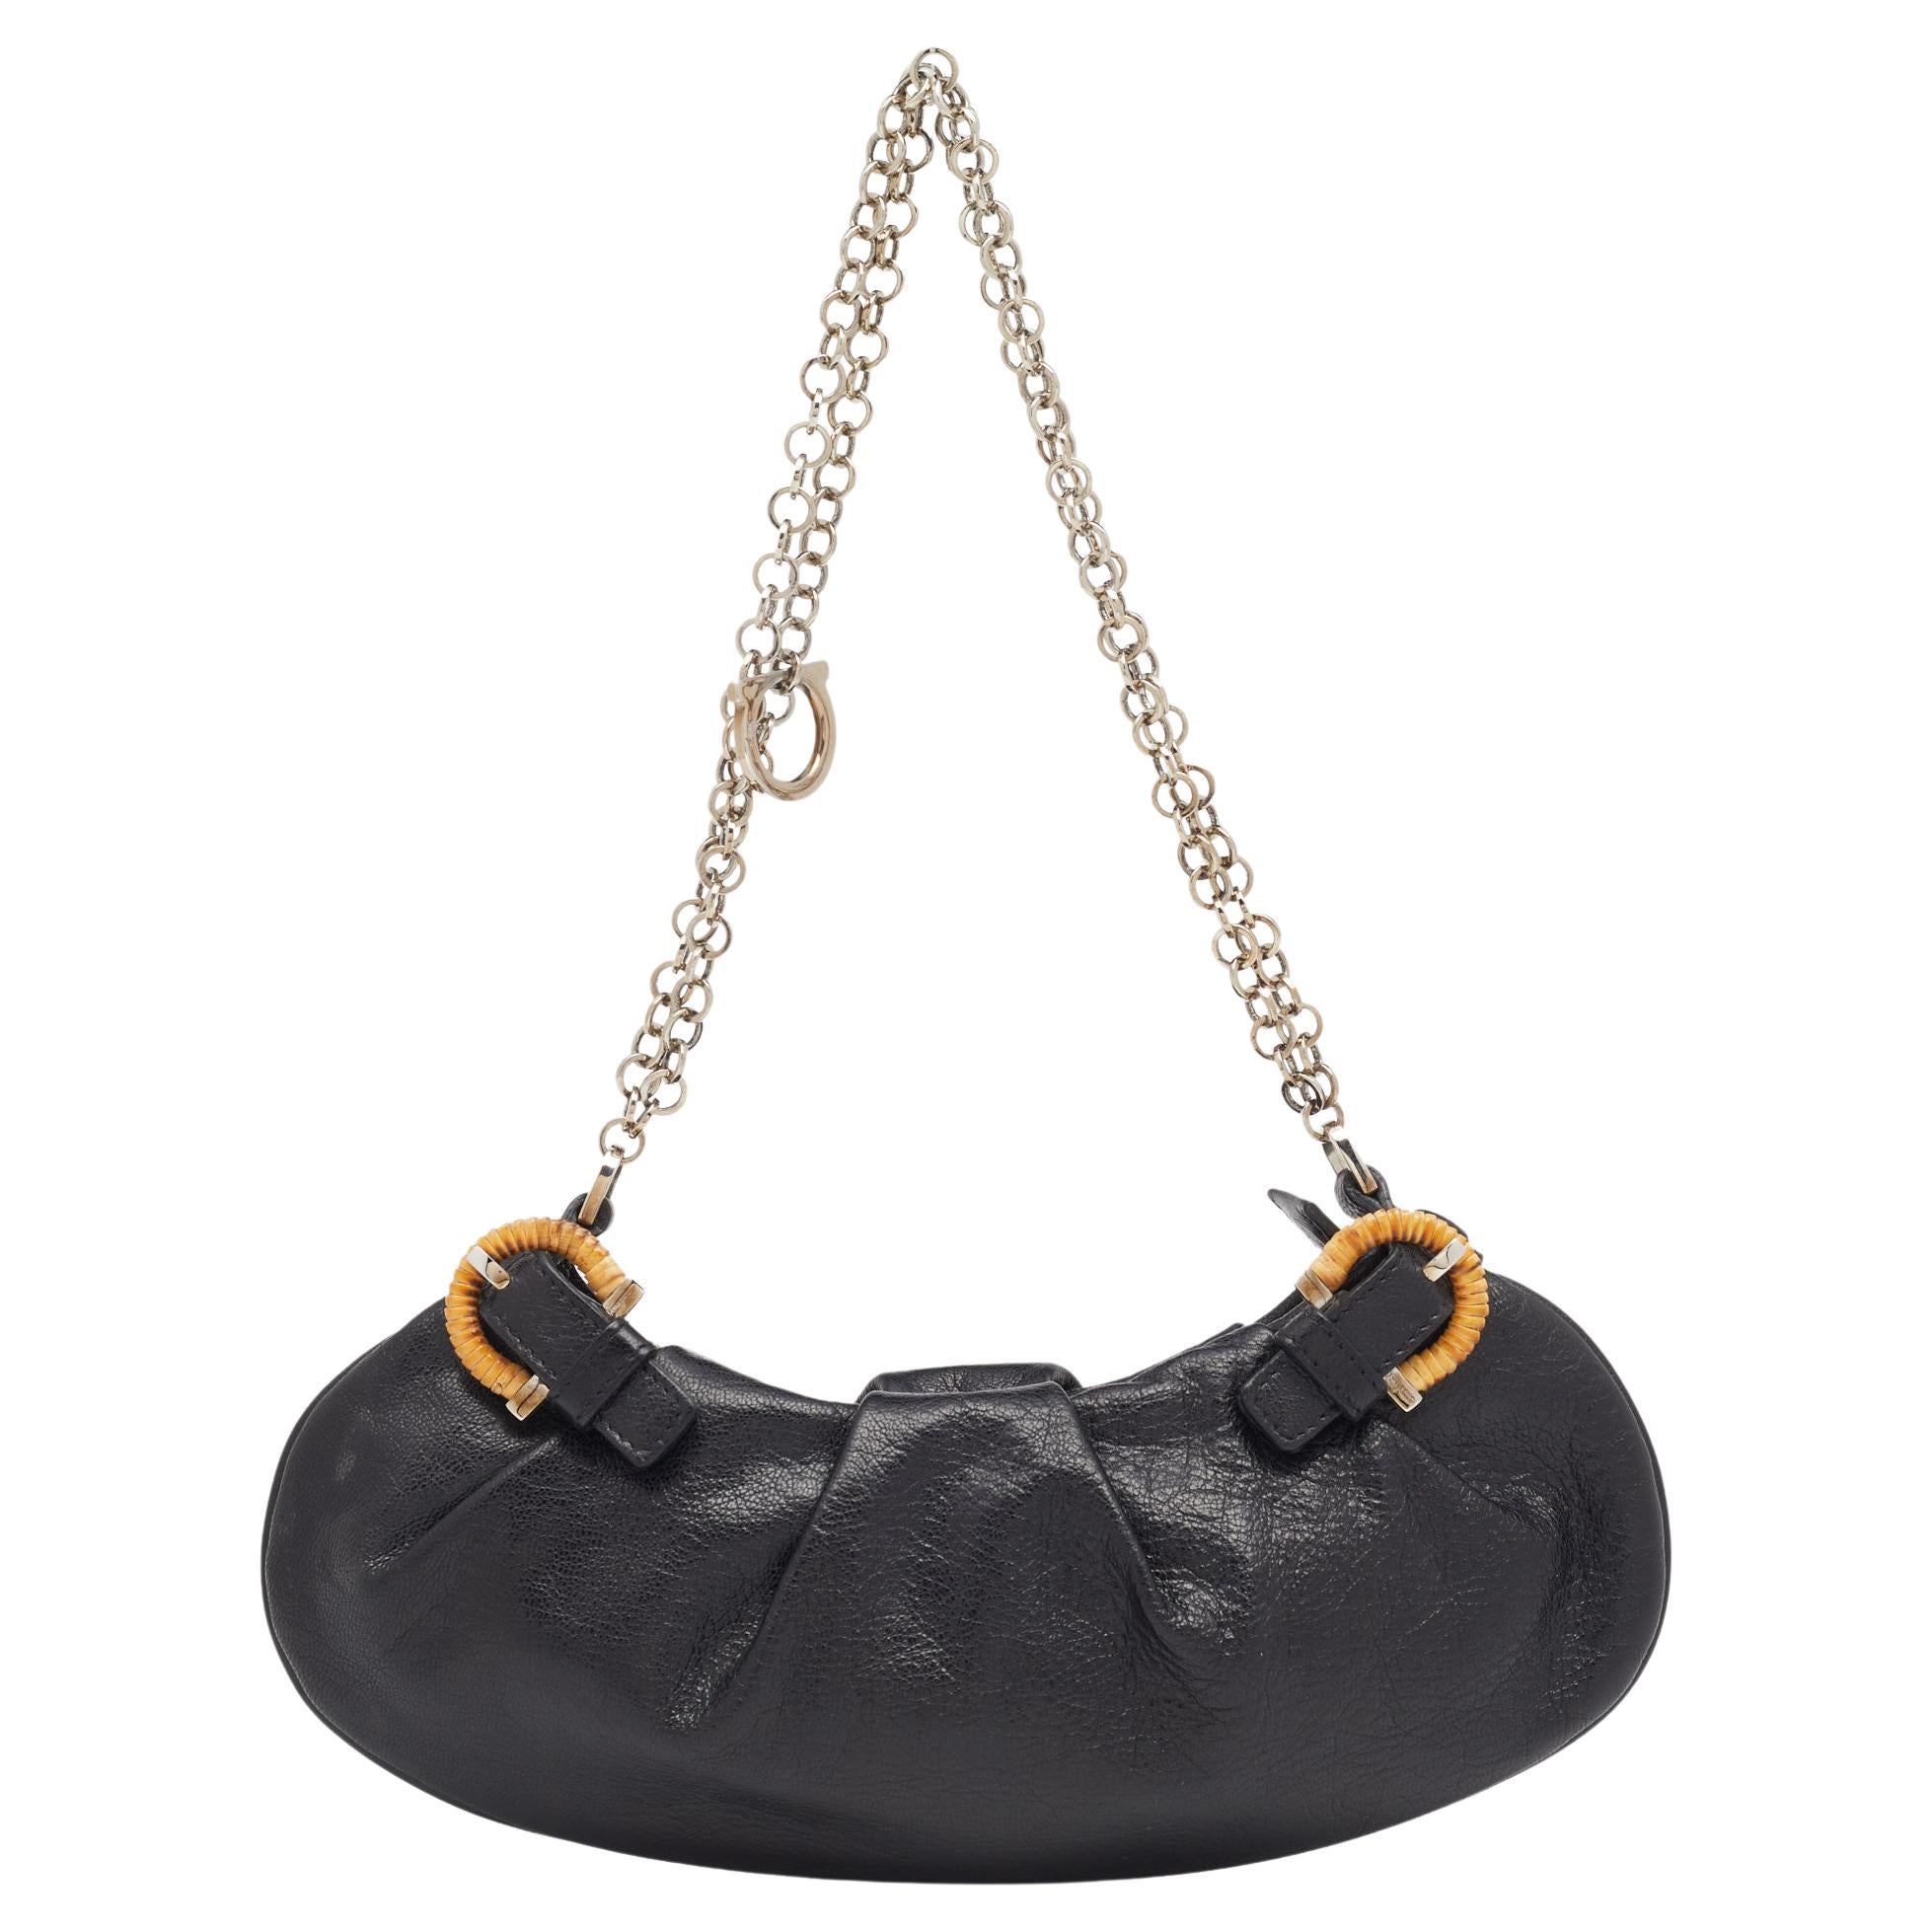 Salvatore Ferragamo Black Leather Chain Shoulder Bag